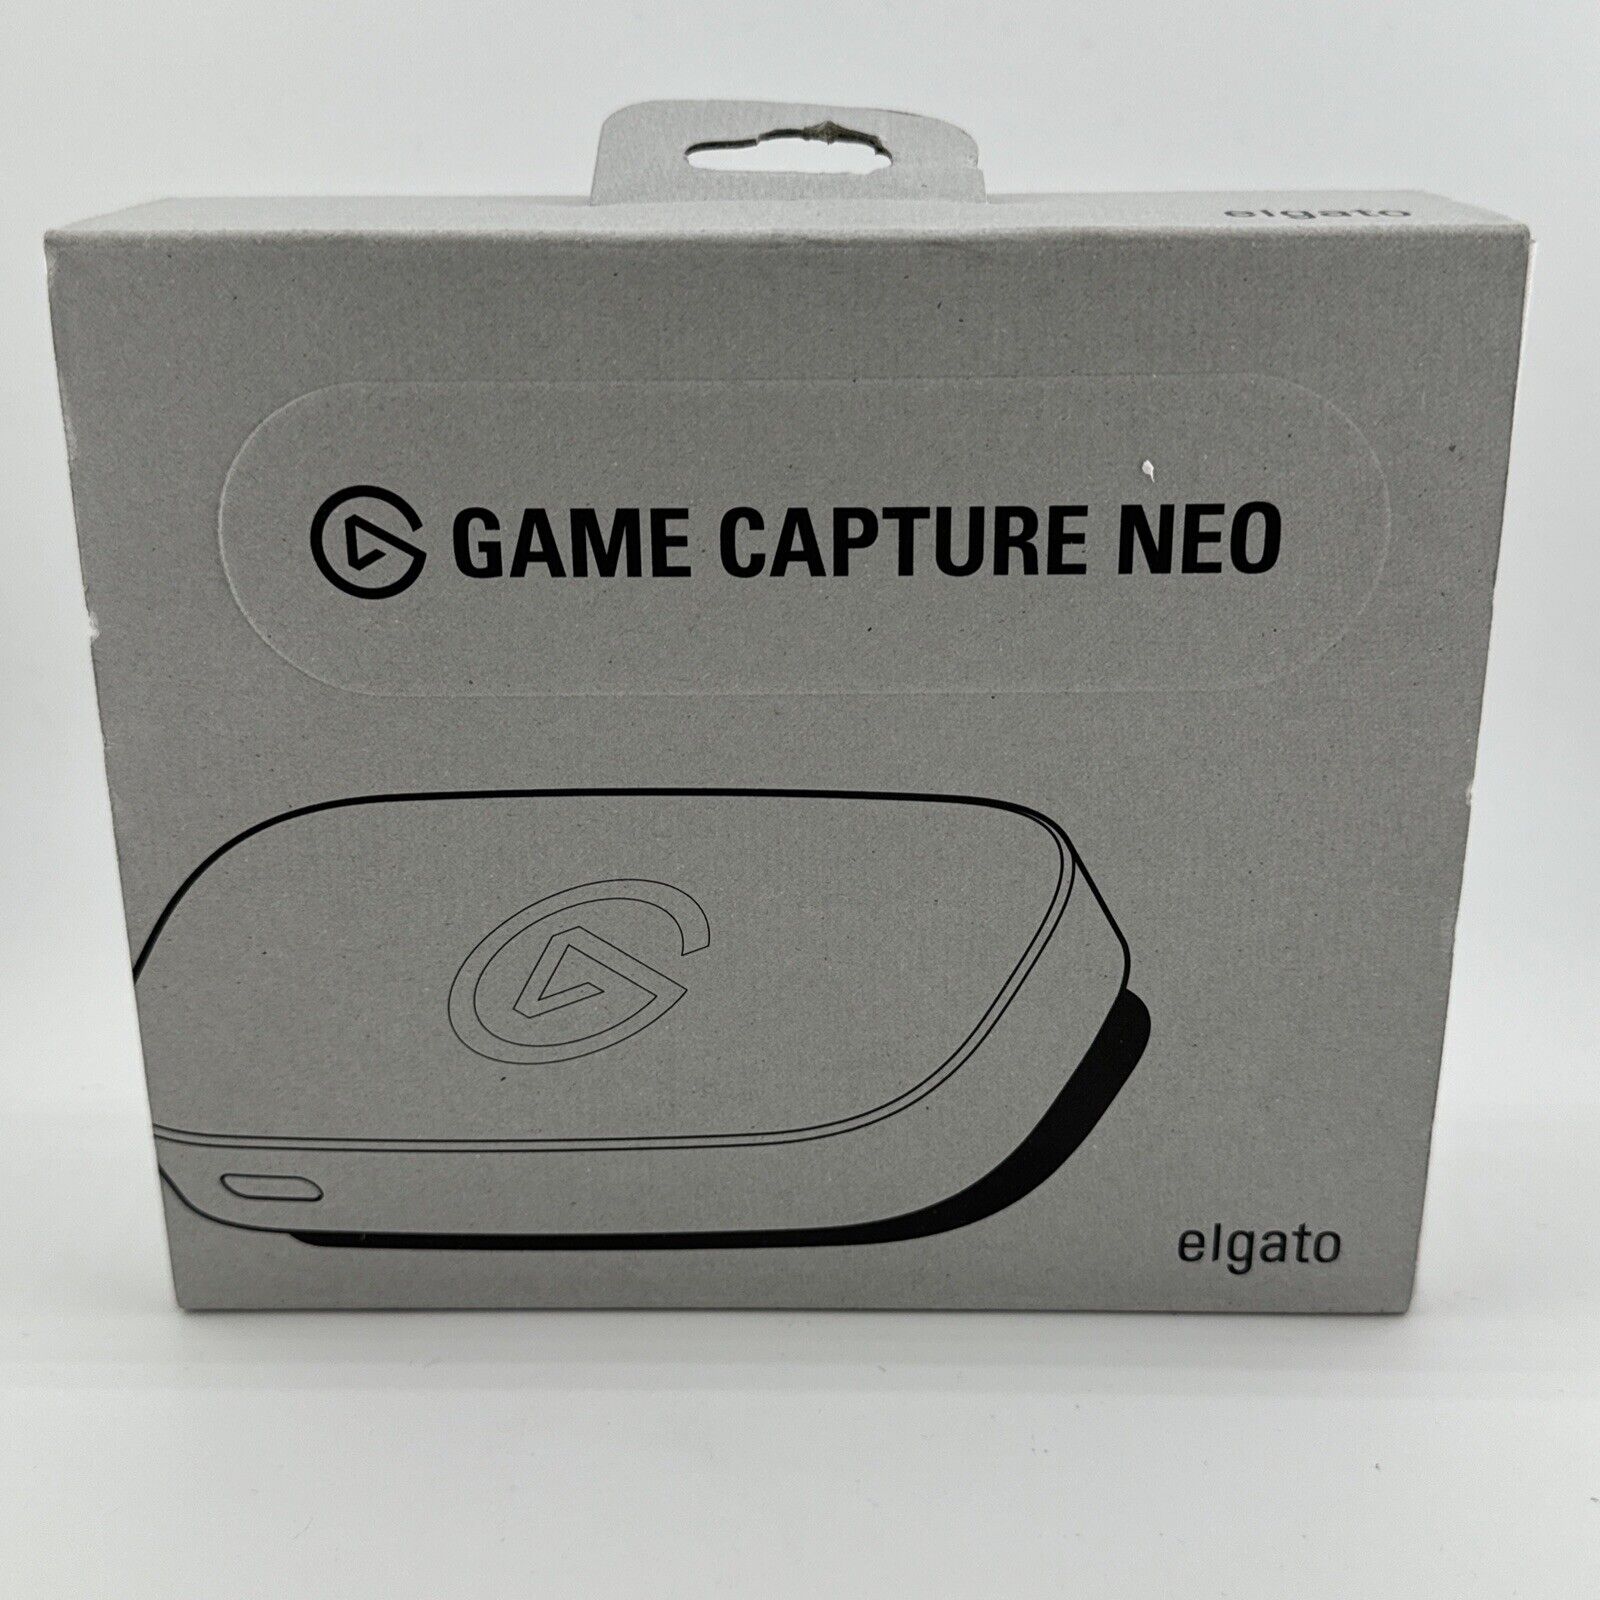 elgato Game Capture Neo - Brand New